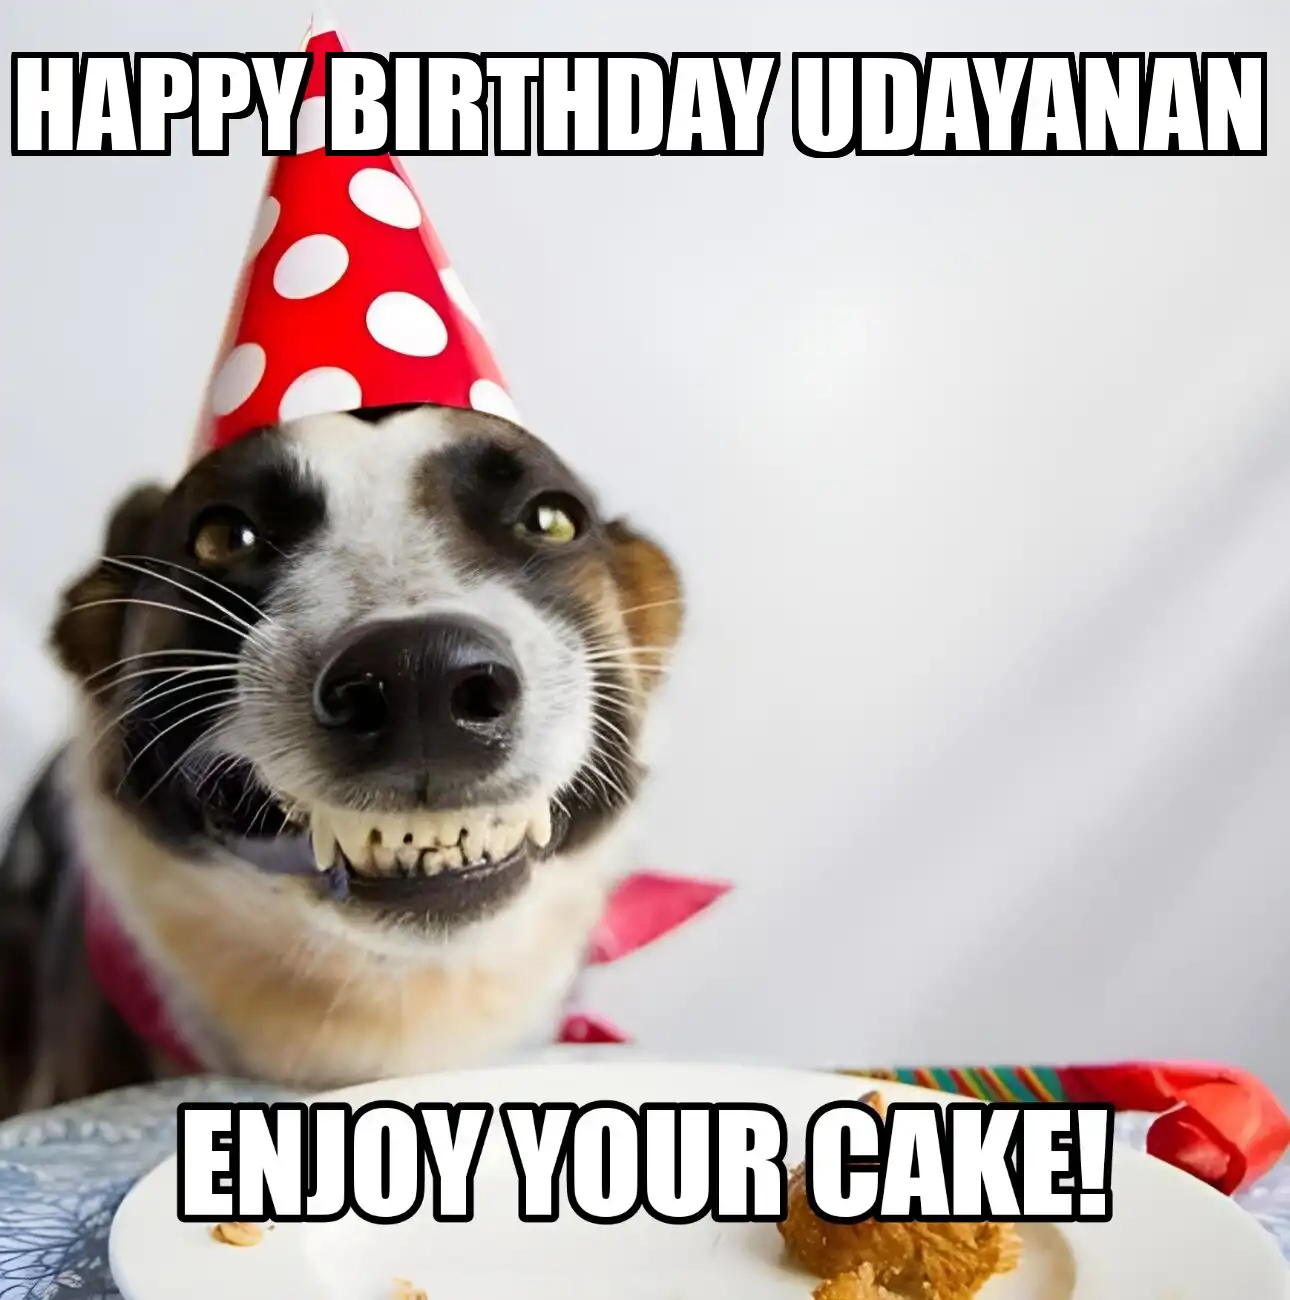 Happy Birthday Udayanan Enjoy Your Cake Dog Meme